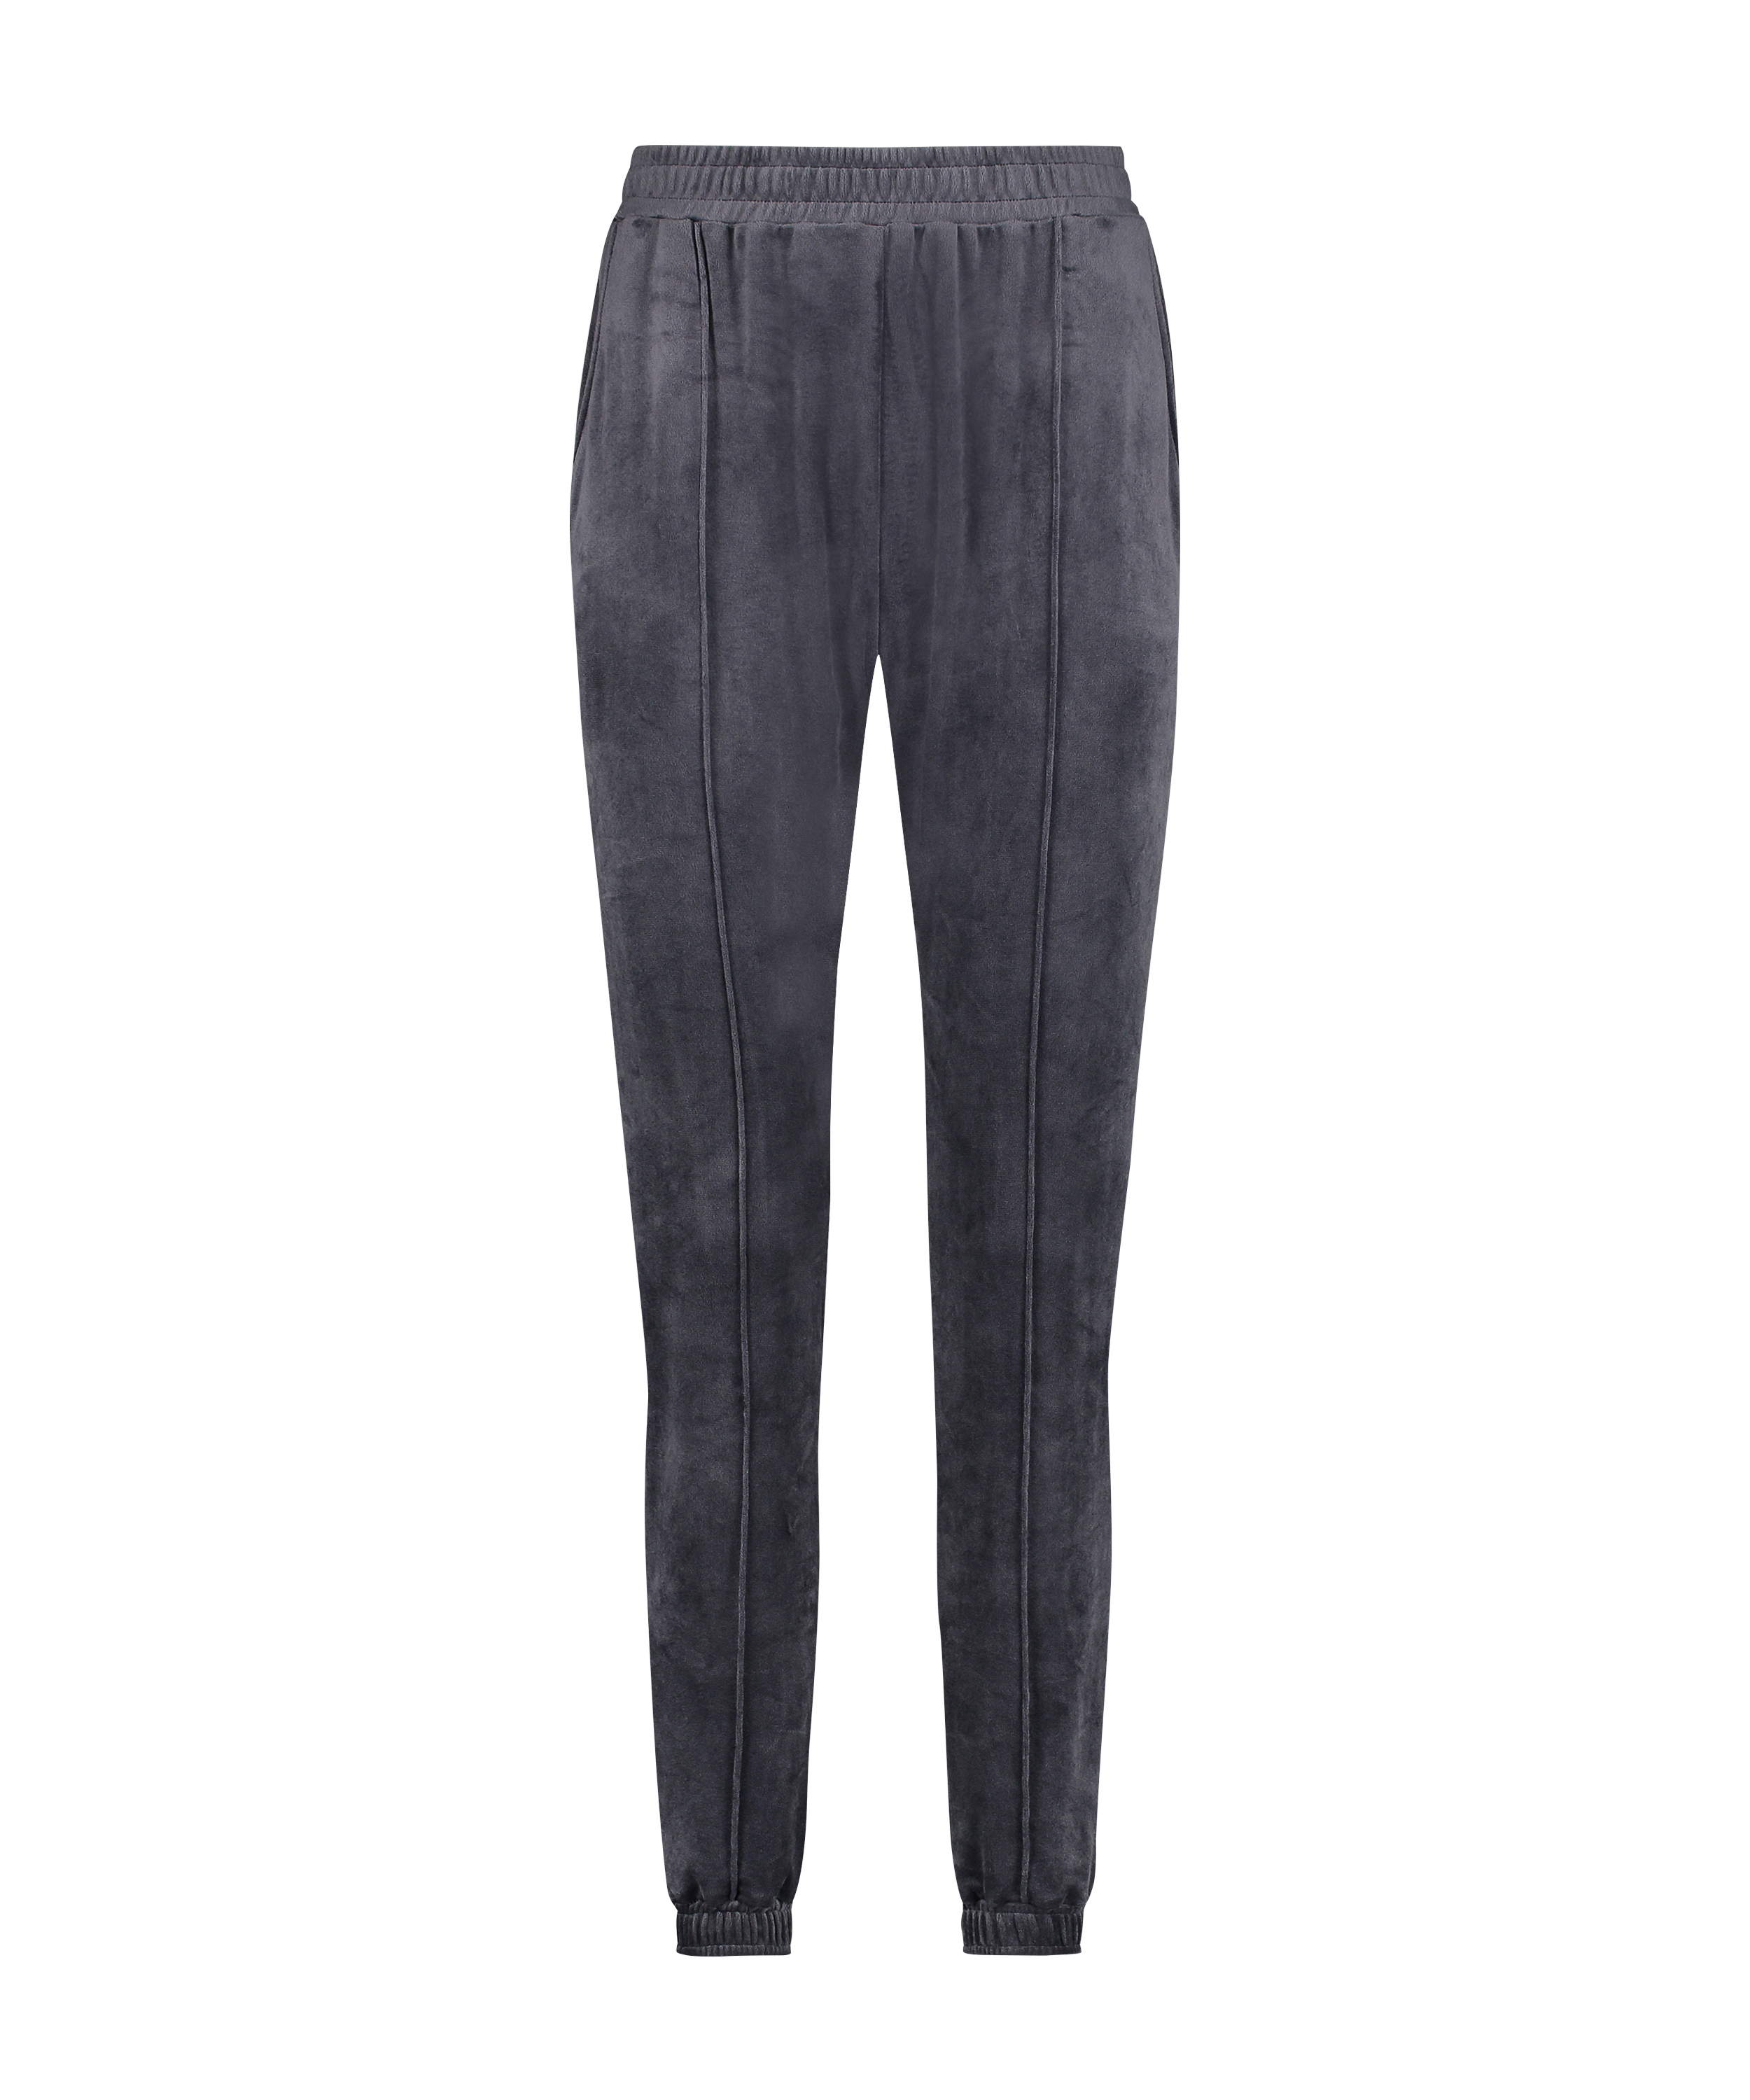 Velour Jogging Pants Pin-tucked, Grey, main